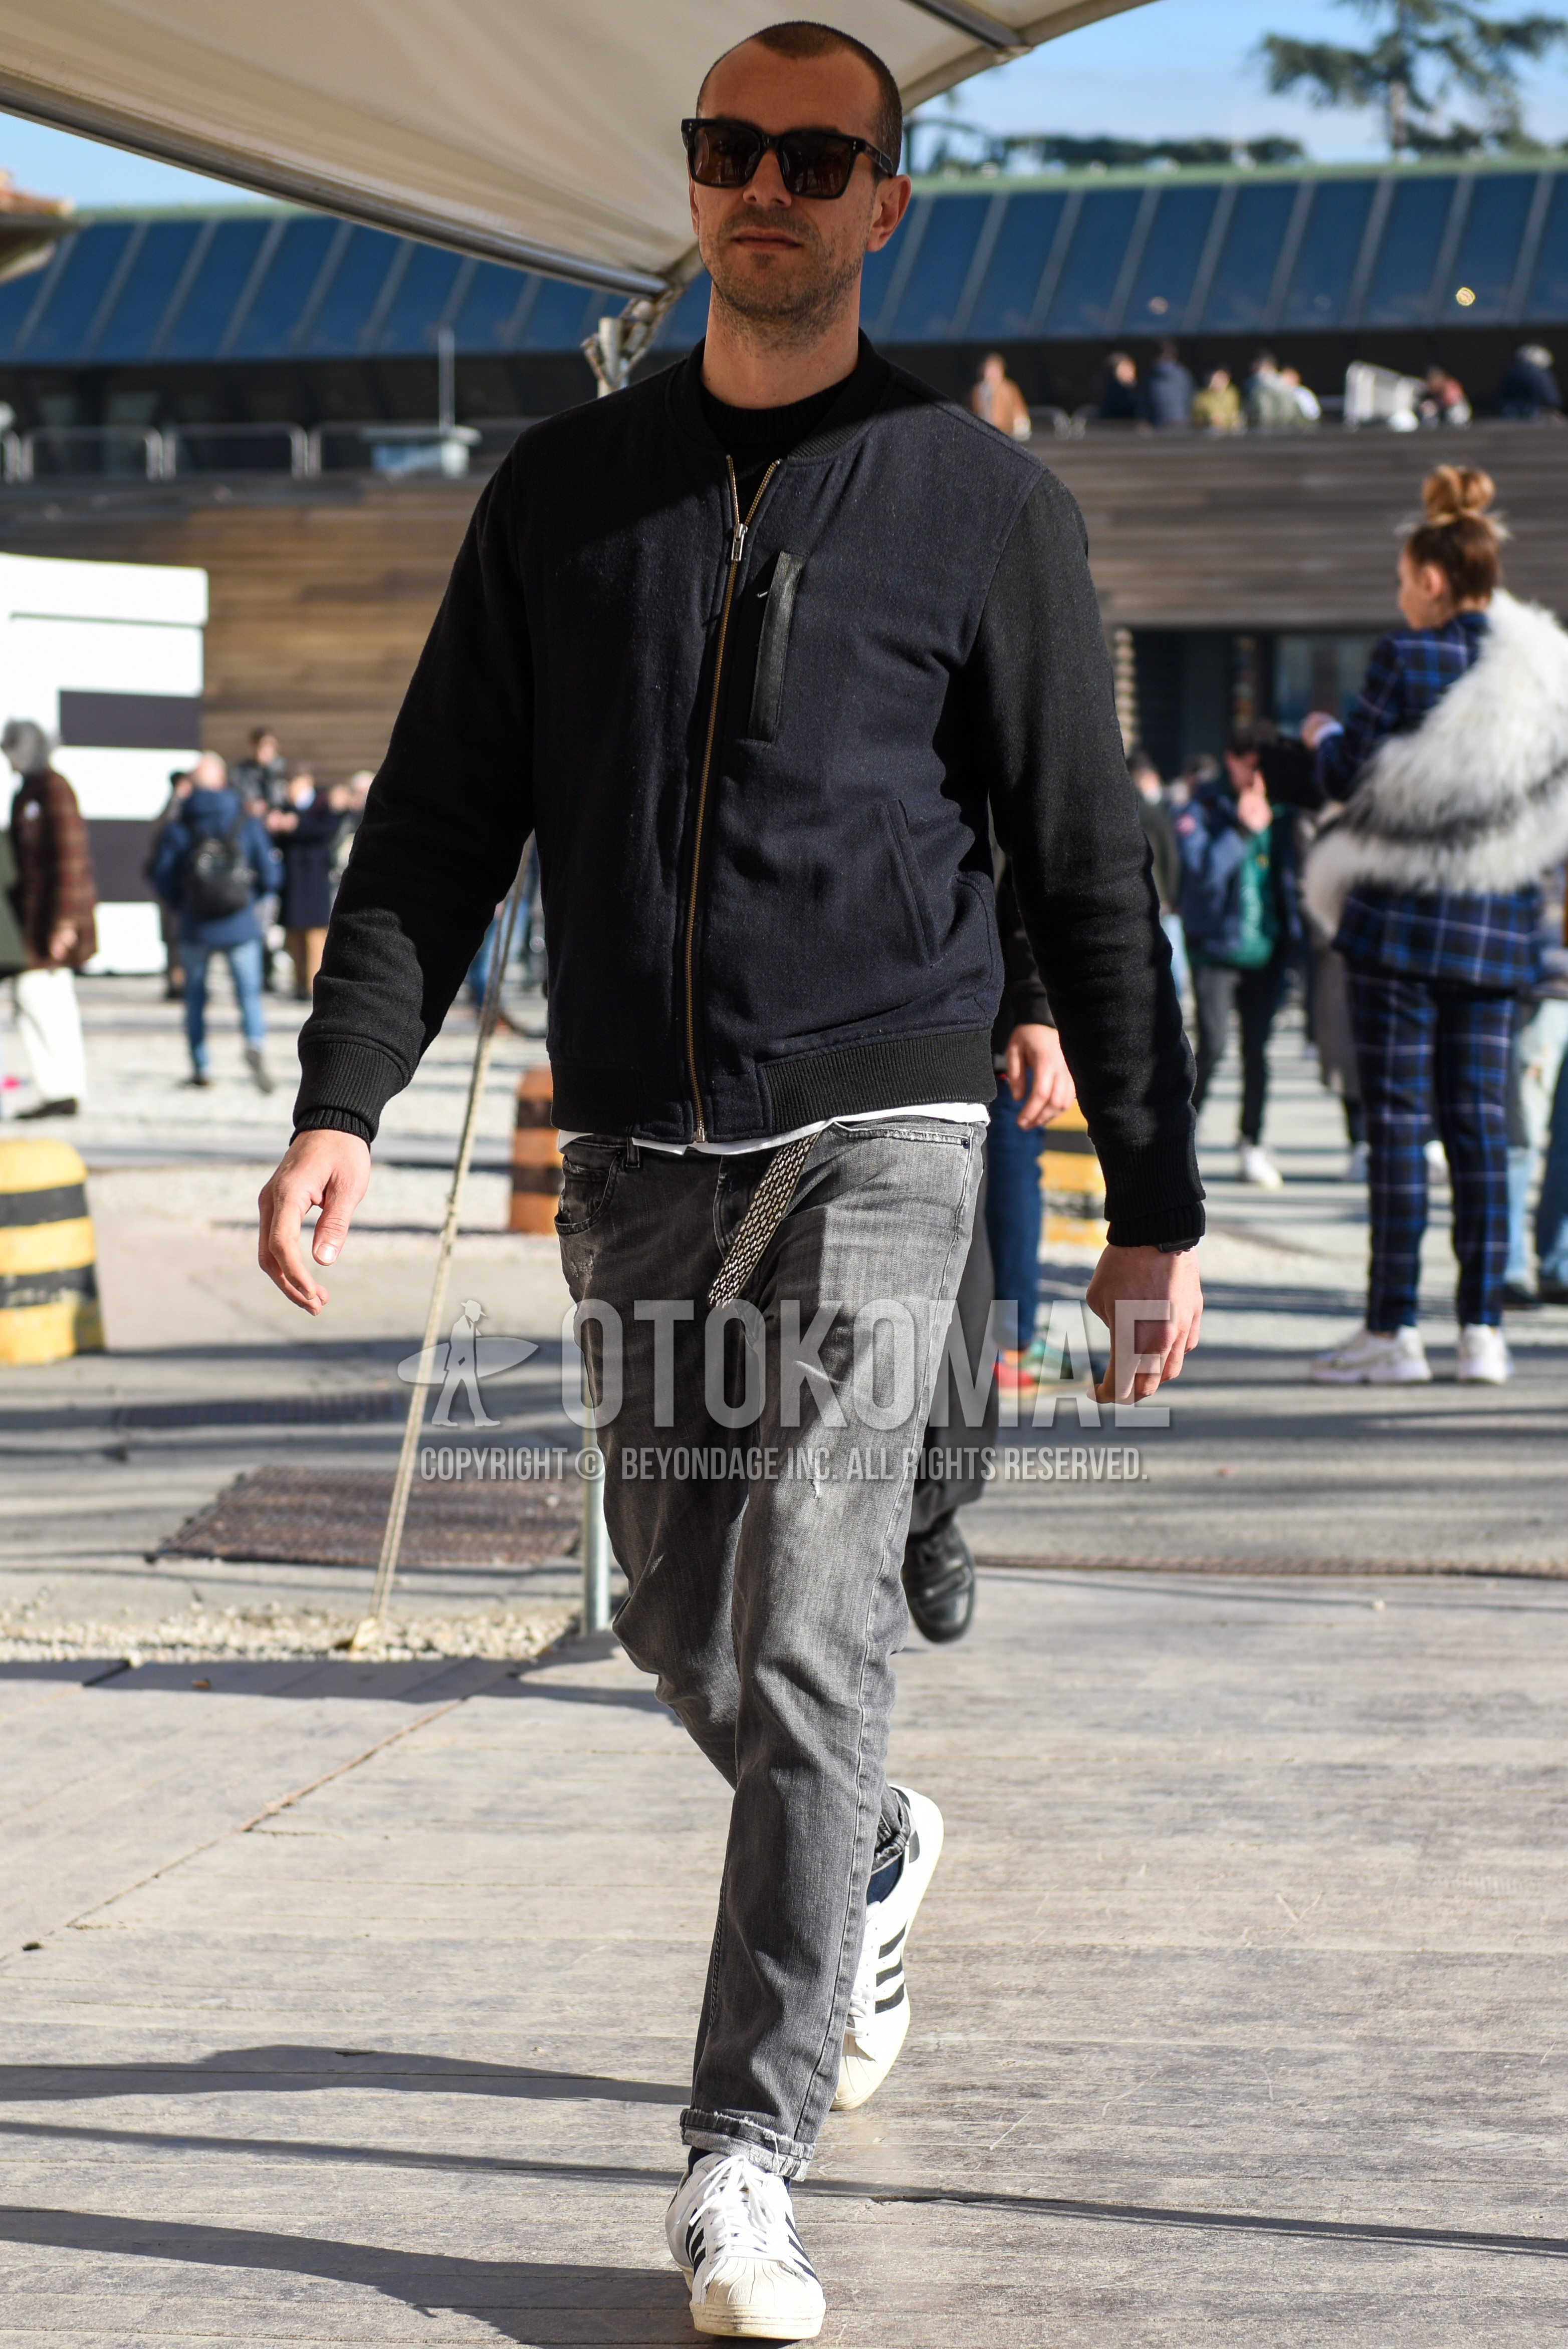 Men's autumn winter outfit with black plain sunglasses, dark gray plain MA-1, gray plain denim/jeans, white low-cut sneakers.